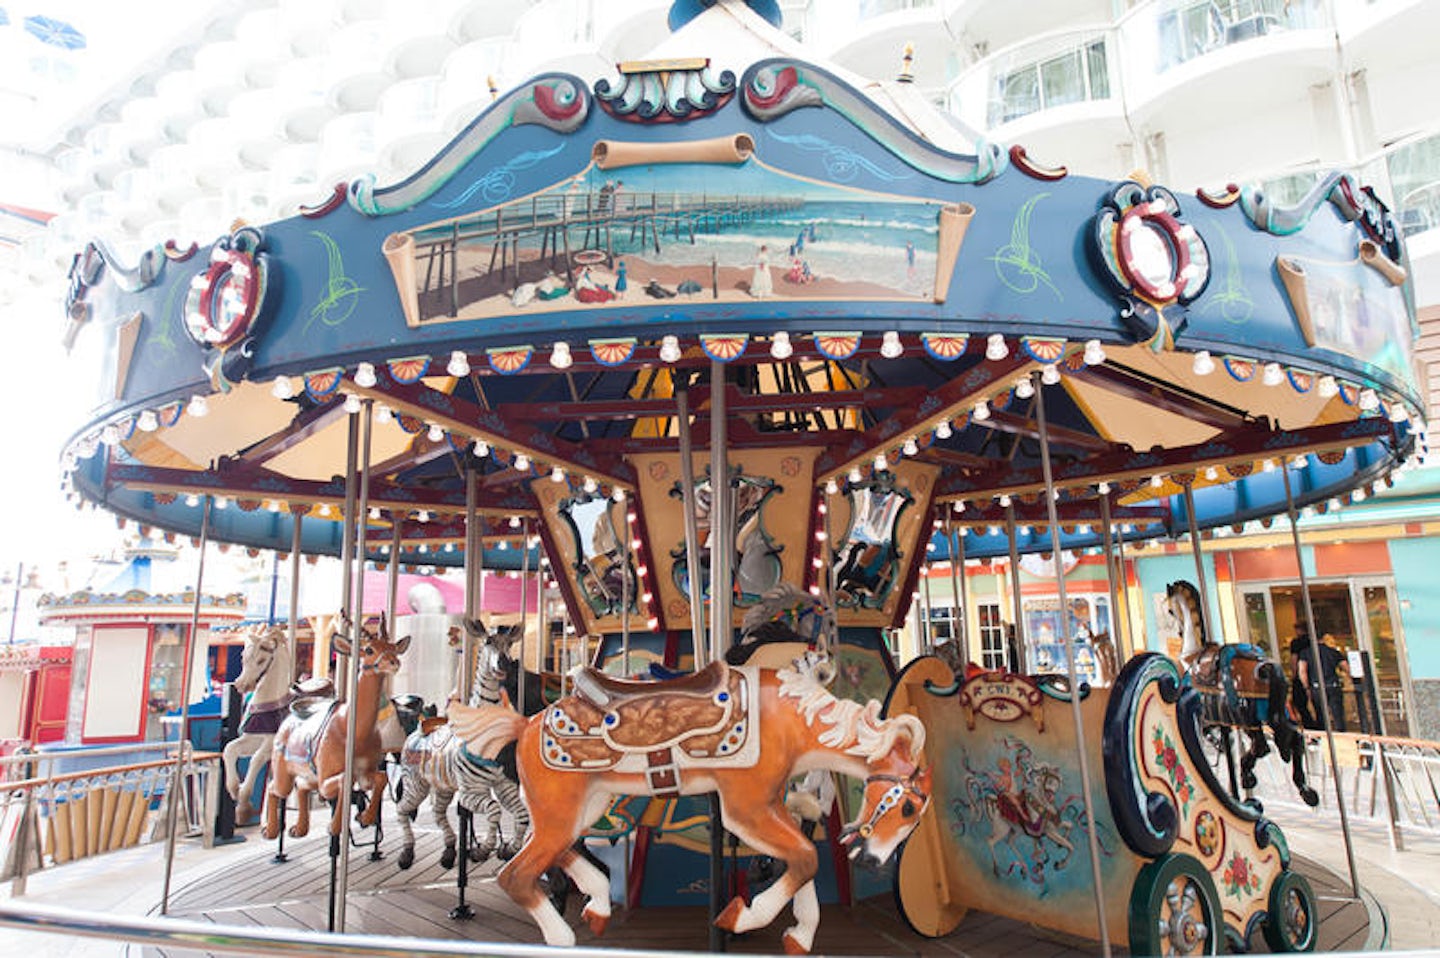 Carousel on Allure of the Seas